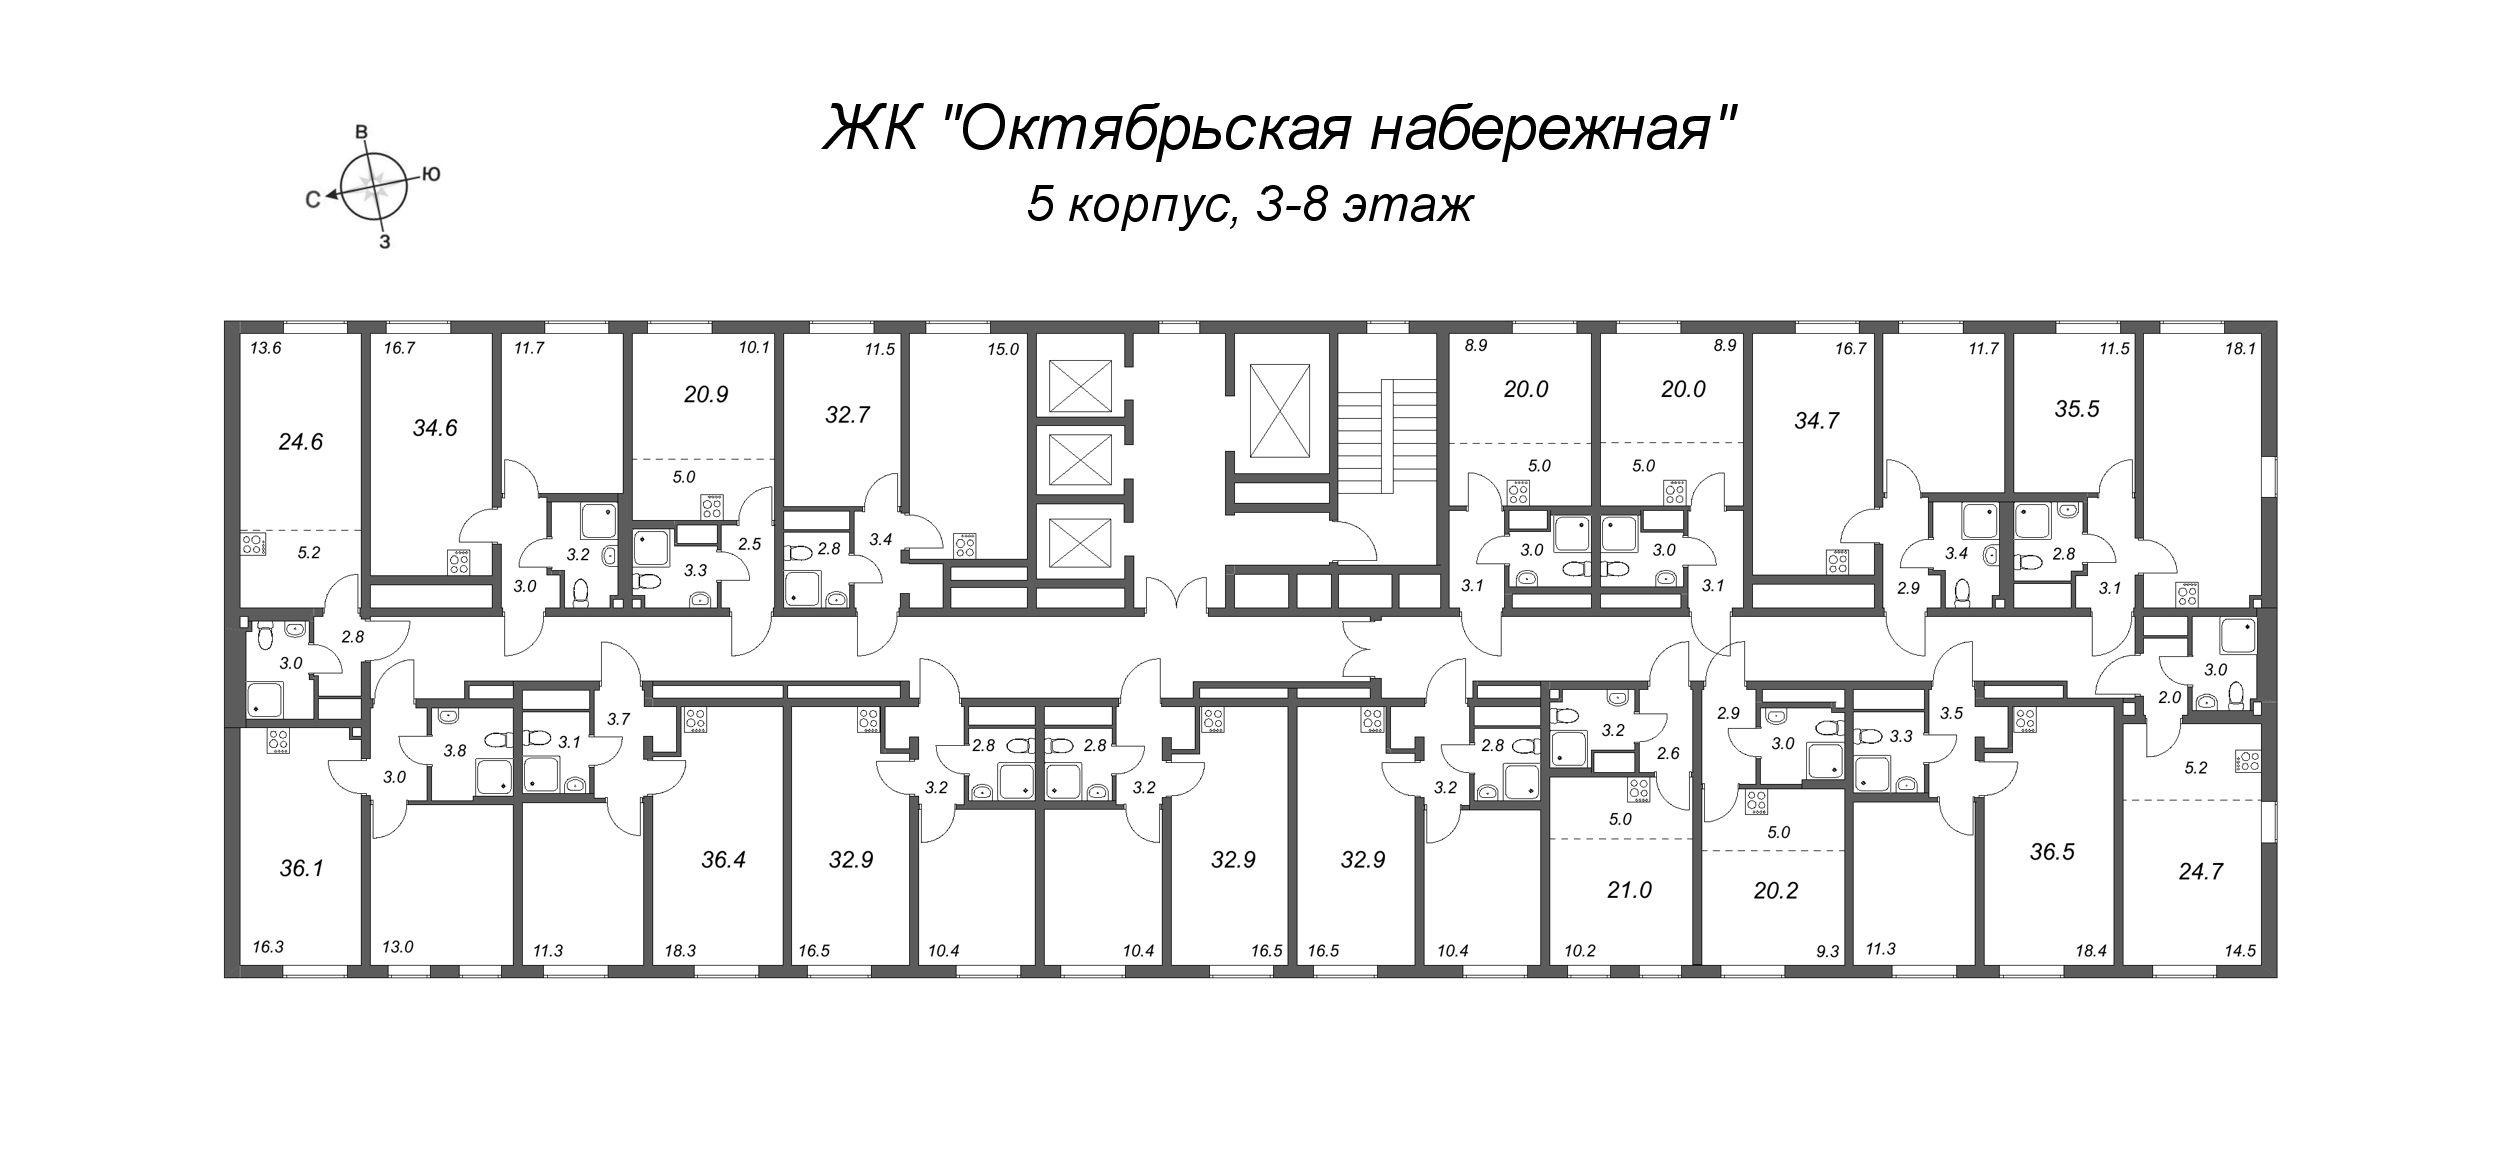 2-комнатная (Евро) квартира, 34.6 м² - планировка этажа